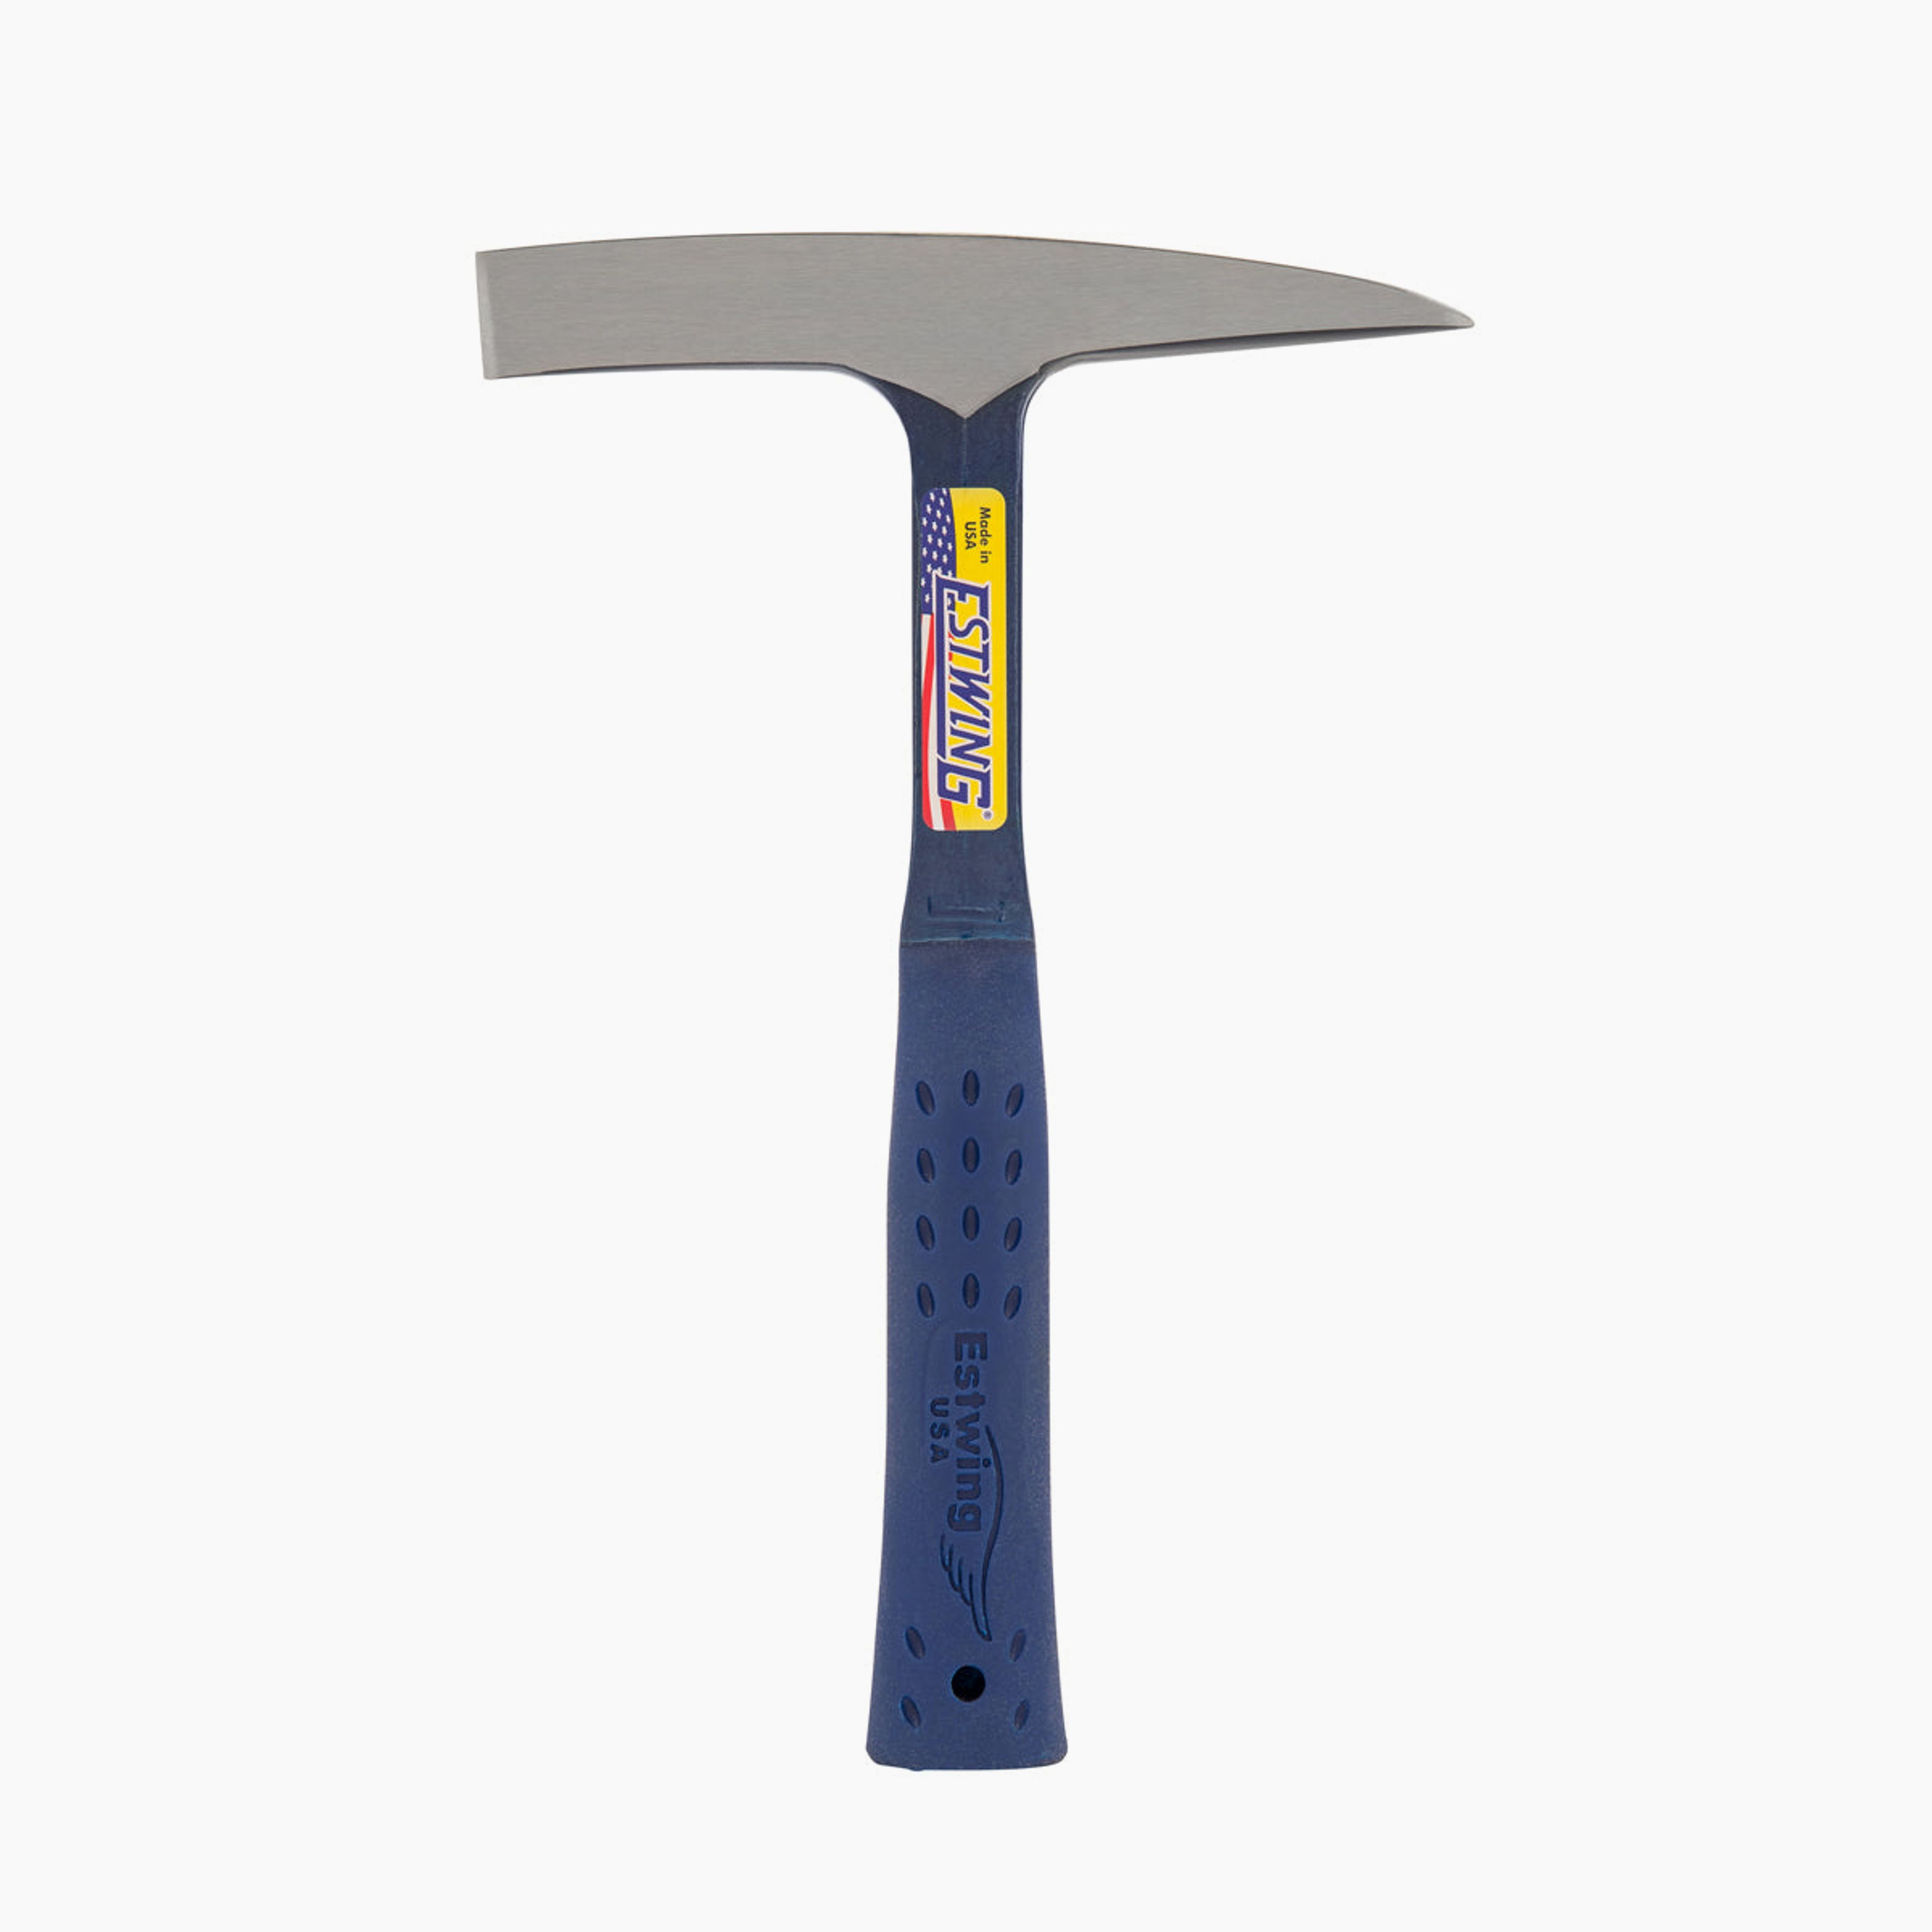 Welding / Chipping Hammer